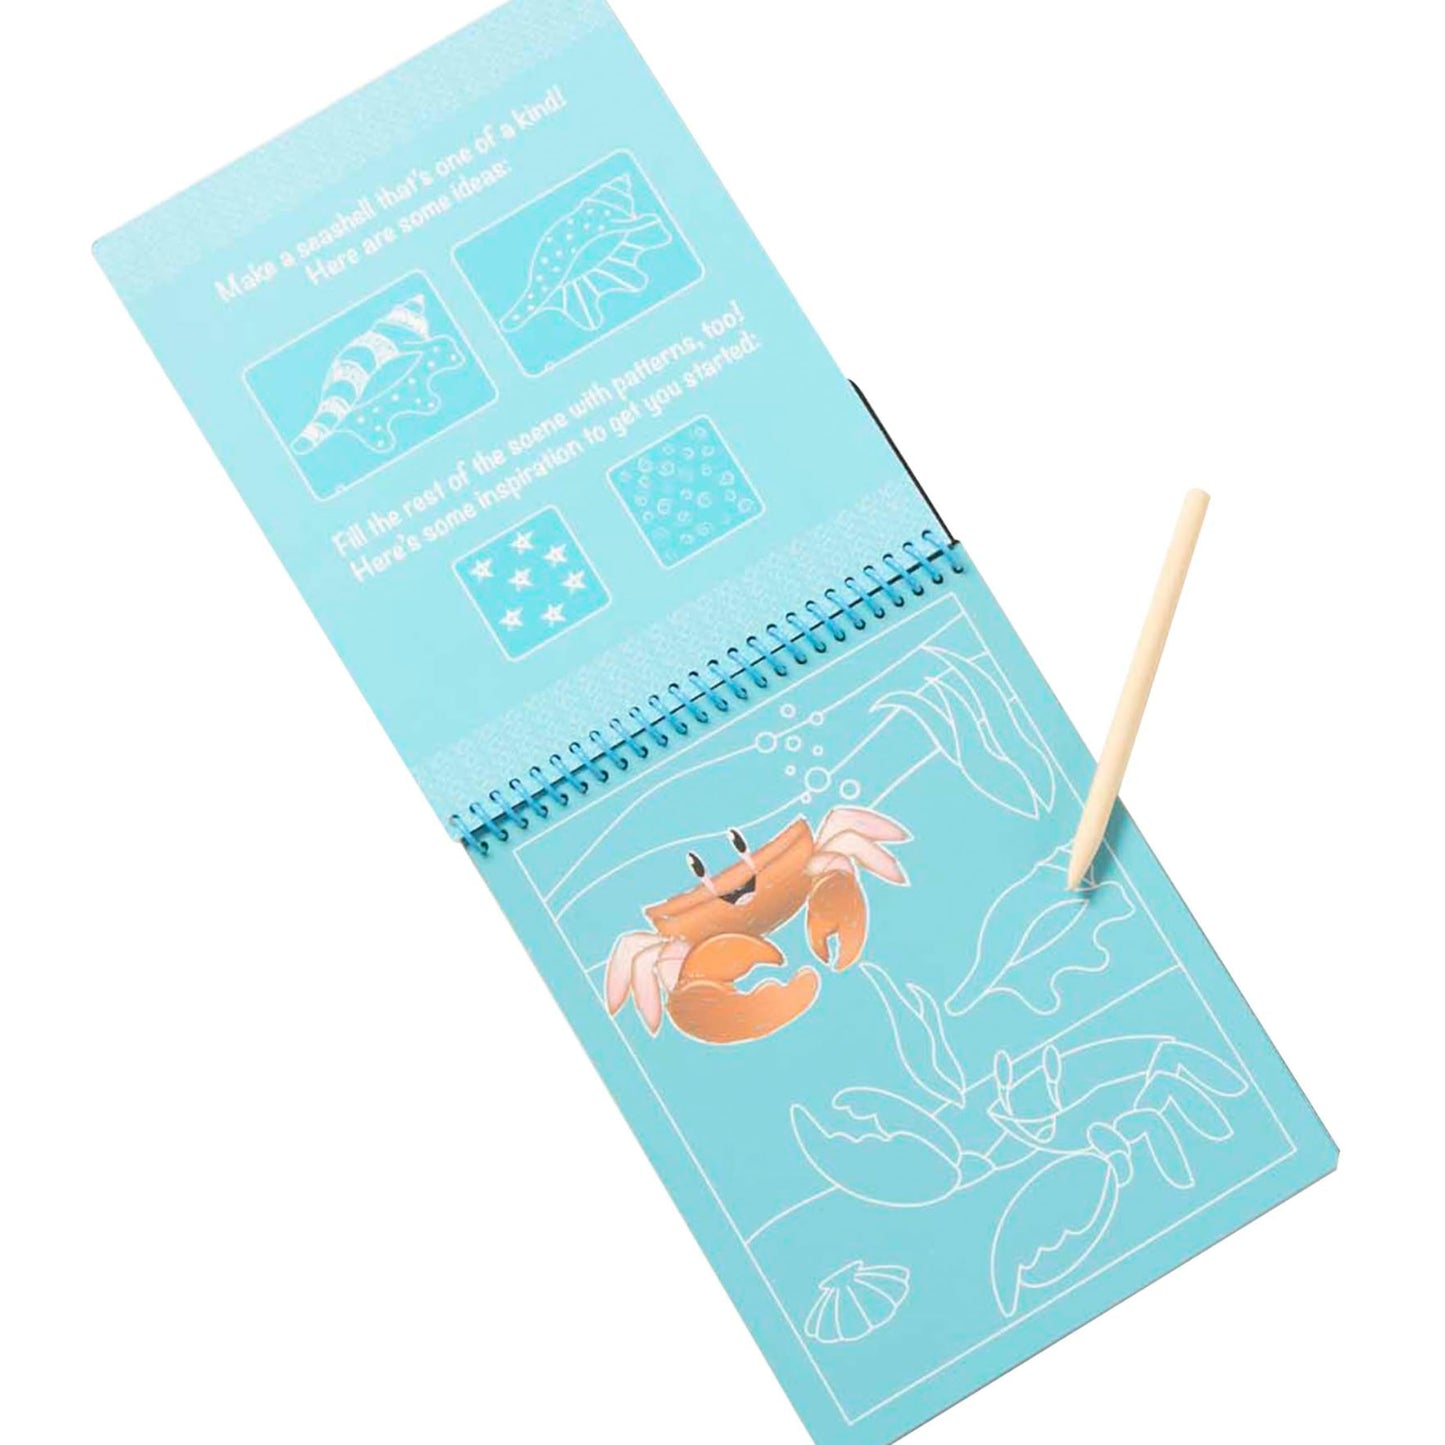 Melissa & Doug Sea Life Color-Reveal Scratch Art Activity Pad